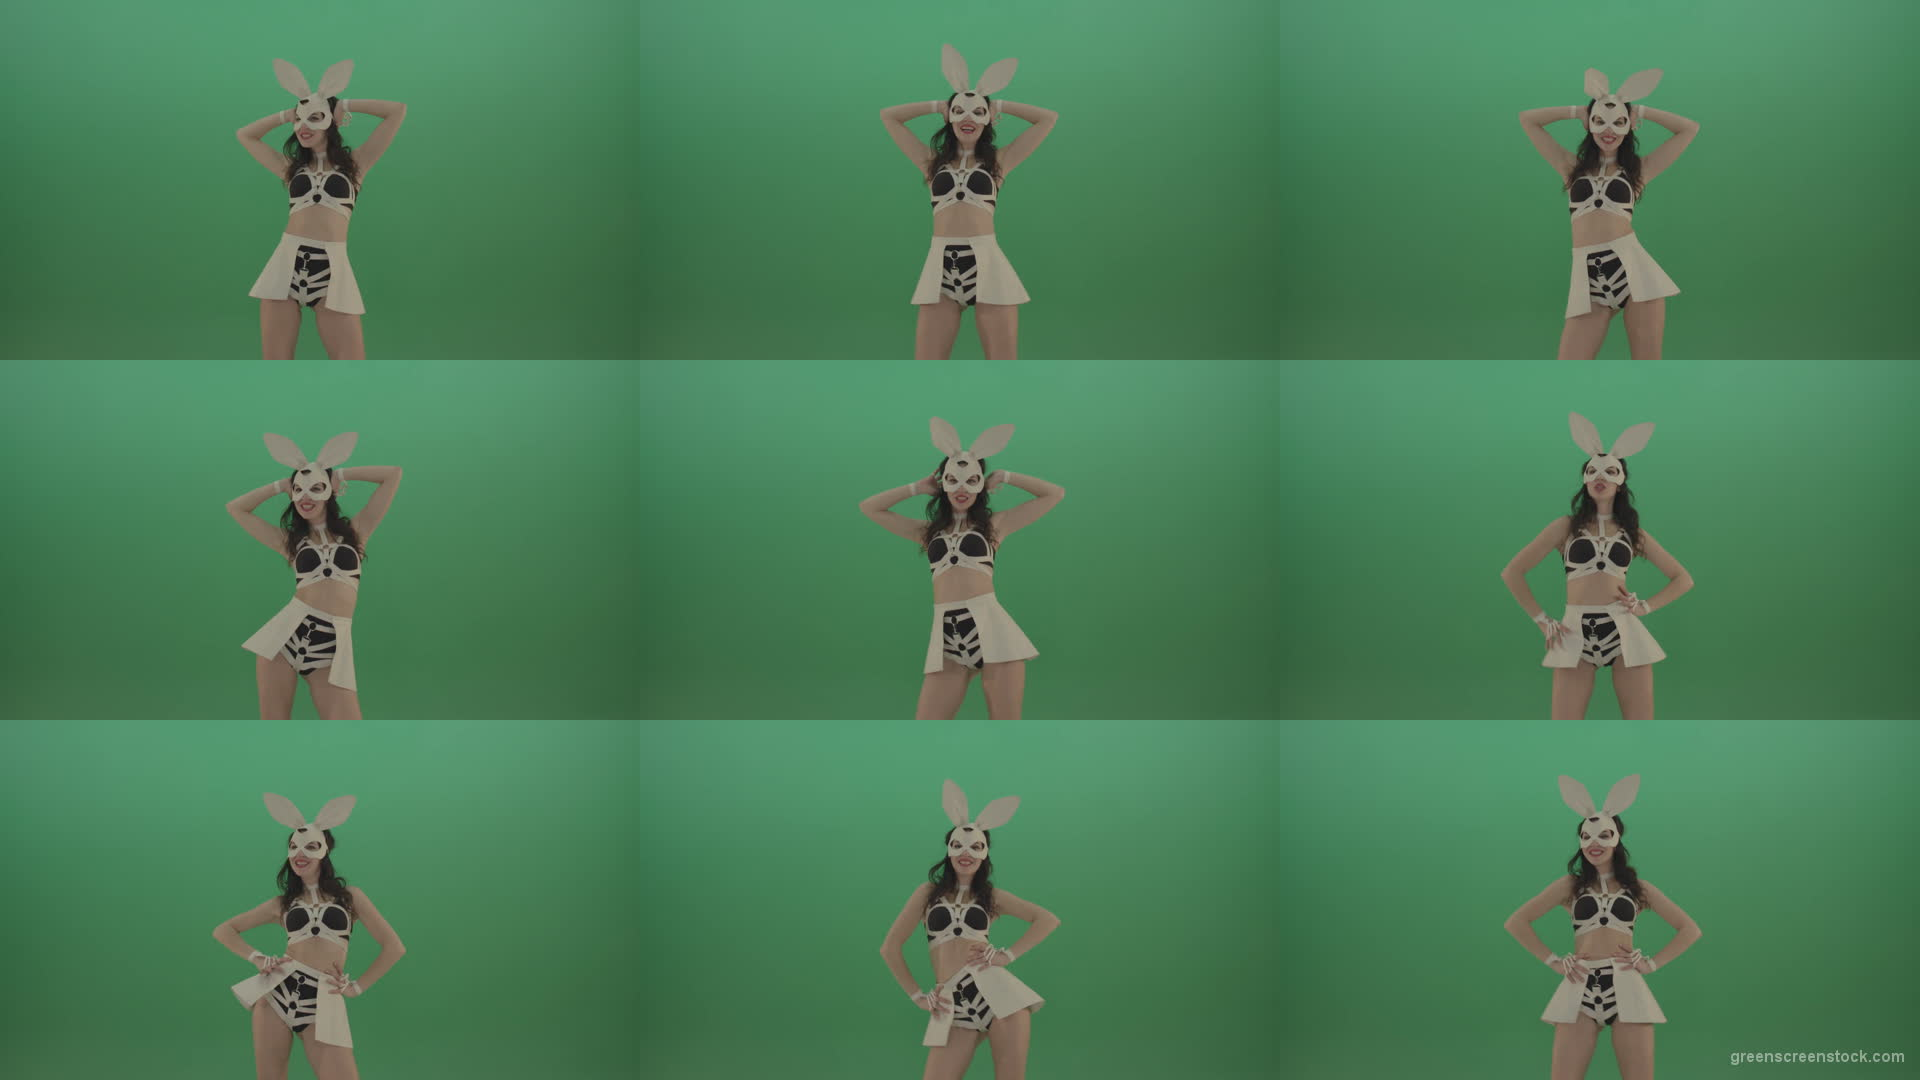 White-Rabbit-Girl-sexy-posing-dancing-in-bunny-style-over-Green-Screen-1920 Green Screen Stock